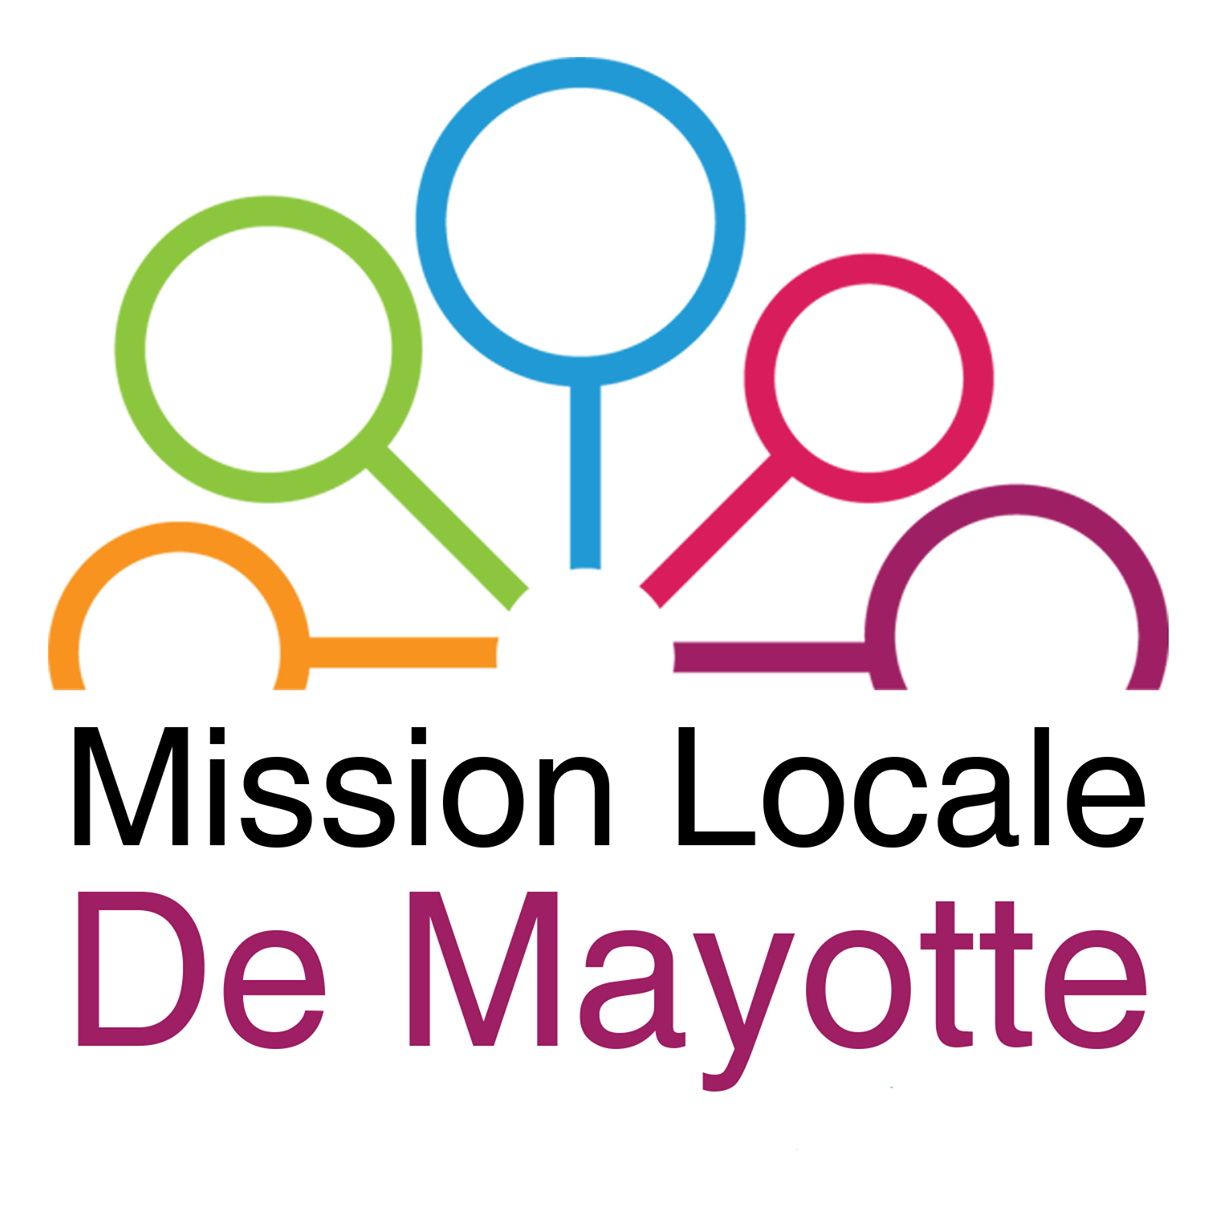 Mission Locale de Mayotte